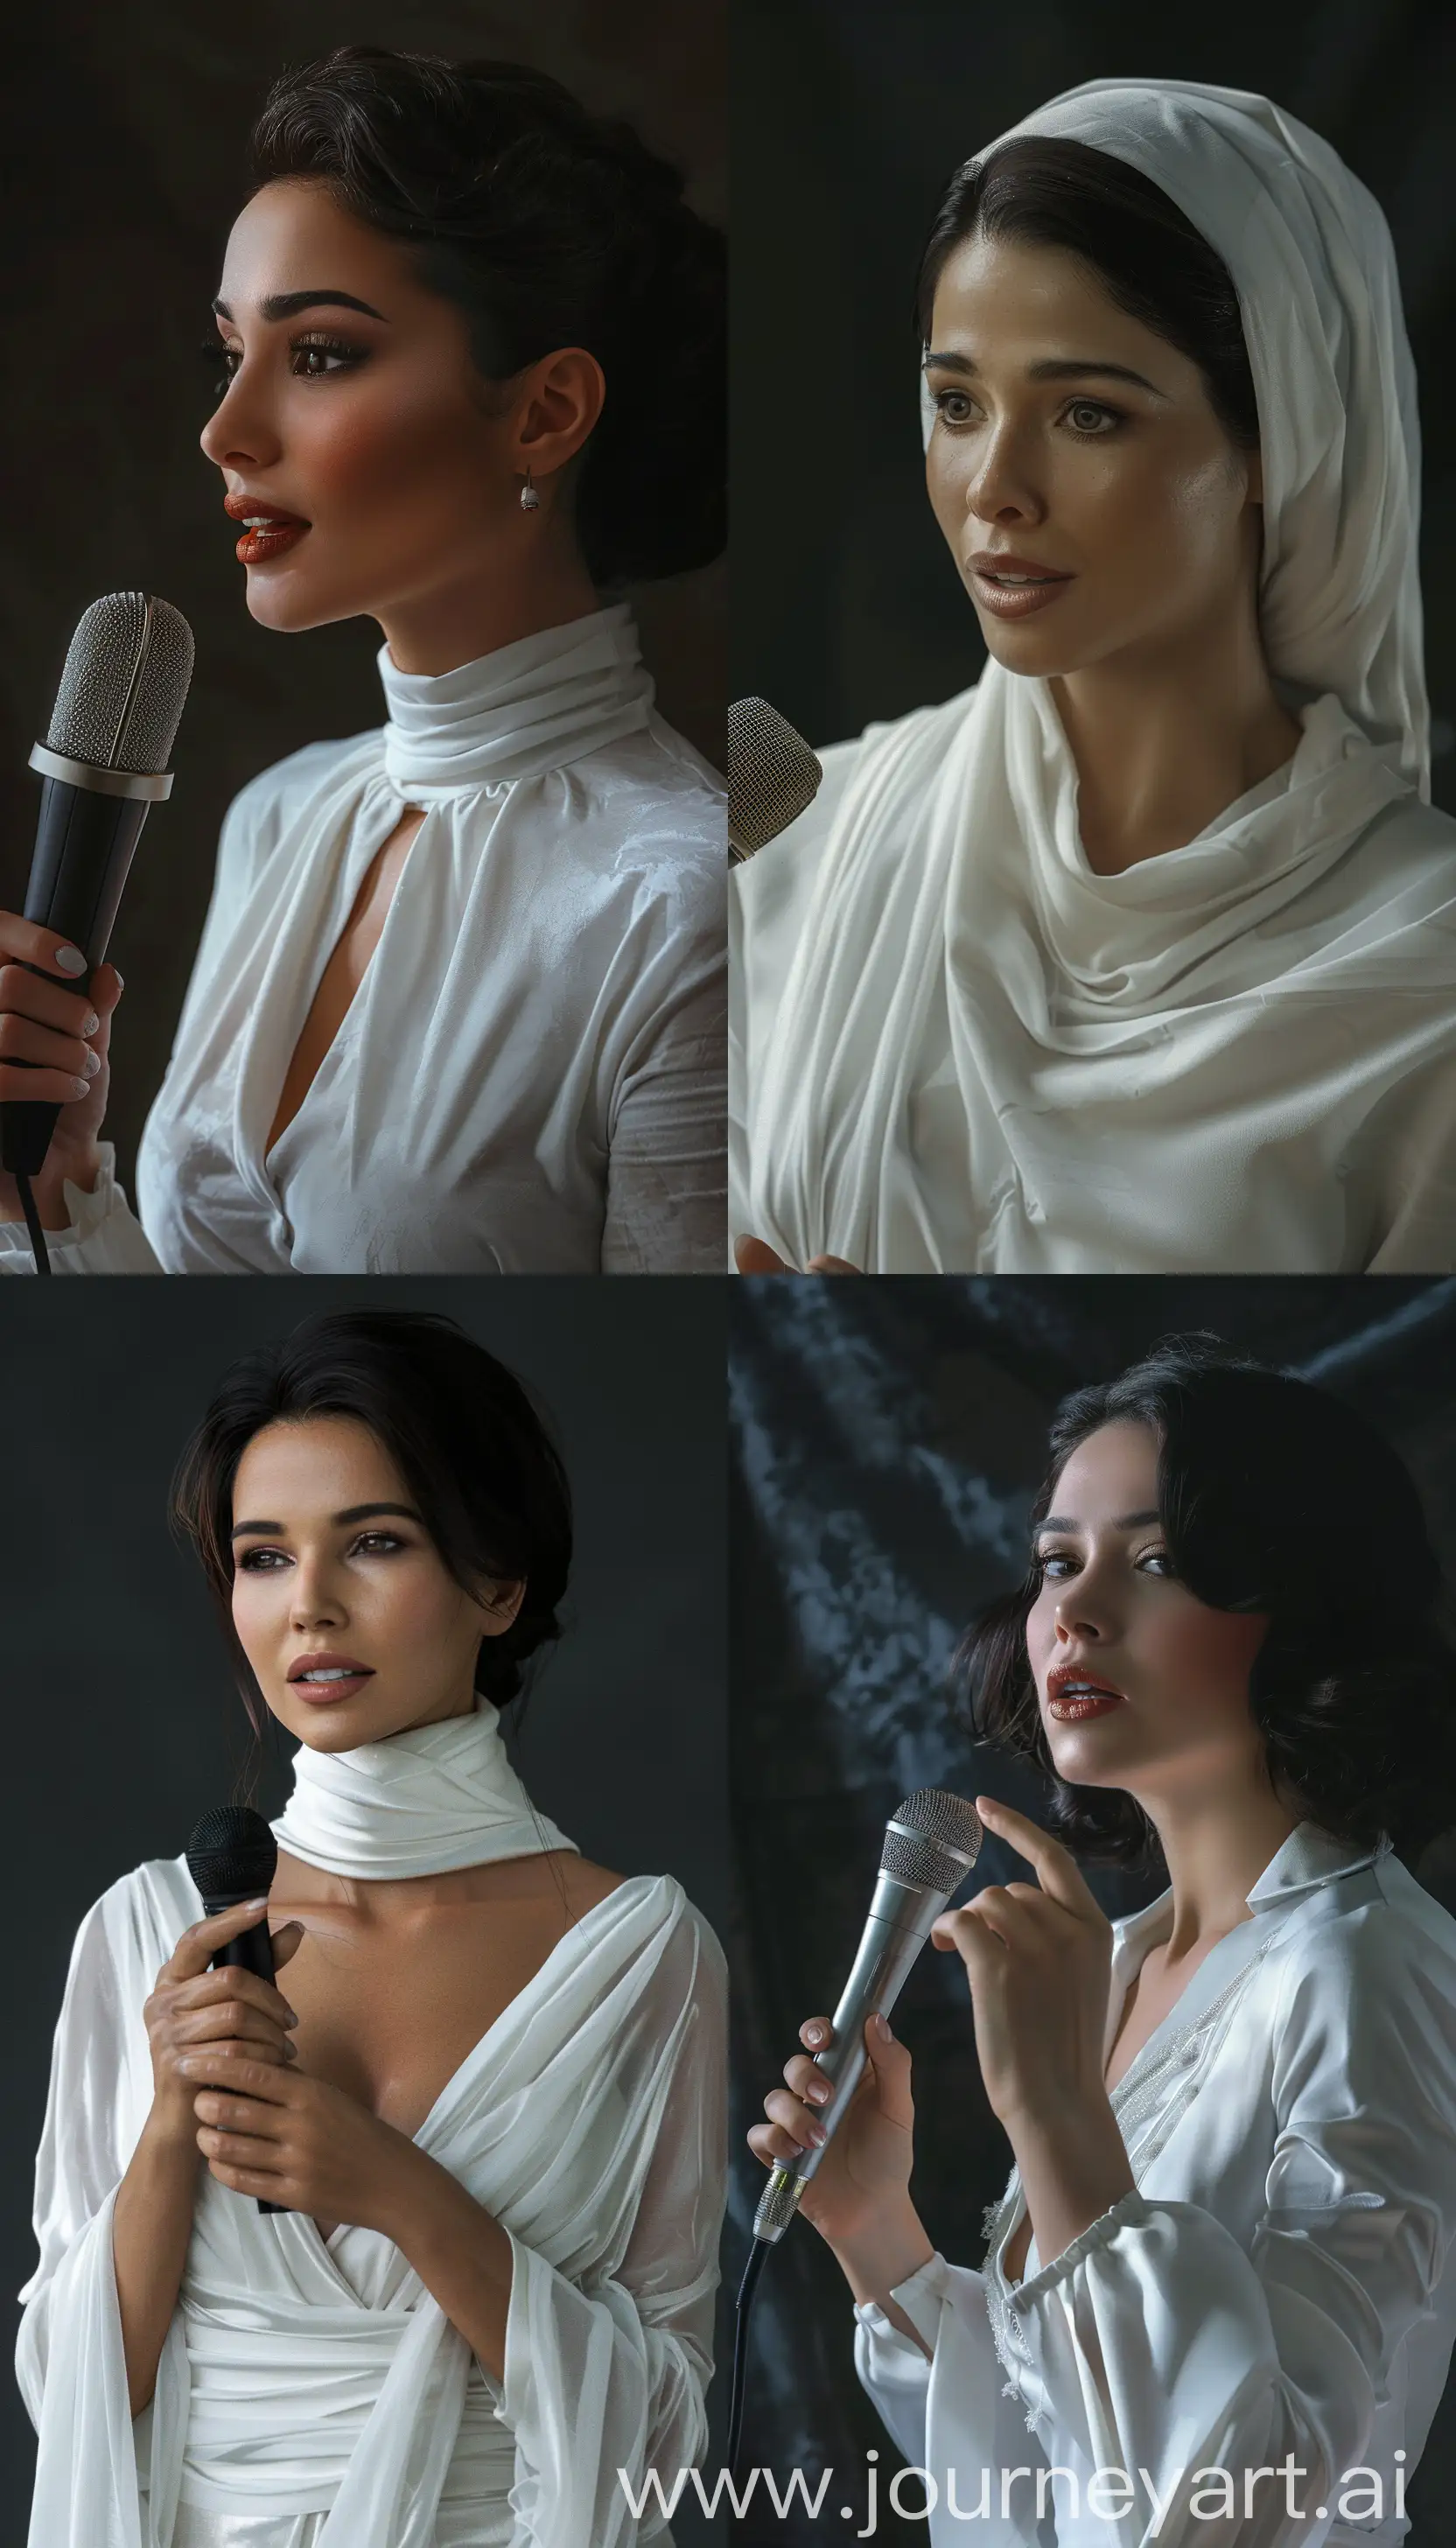 Elegant-Woman-Speaking-into-Microphone-Studio-Photography-Portrait-in-White-Attire